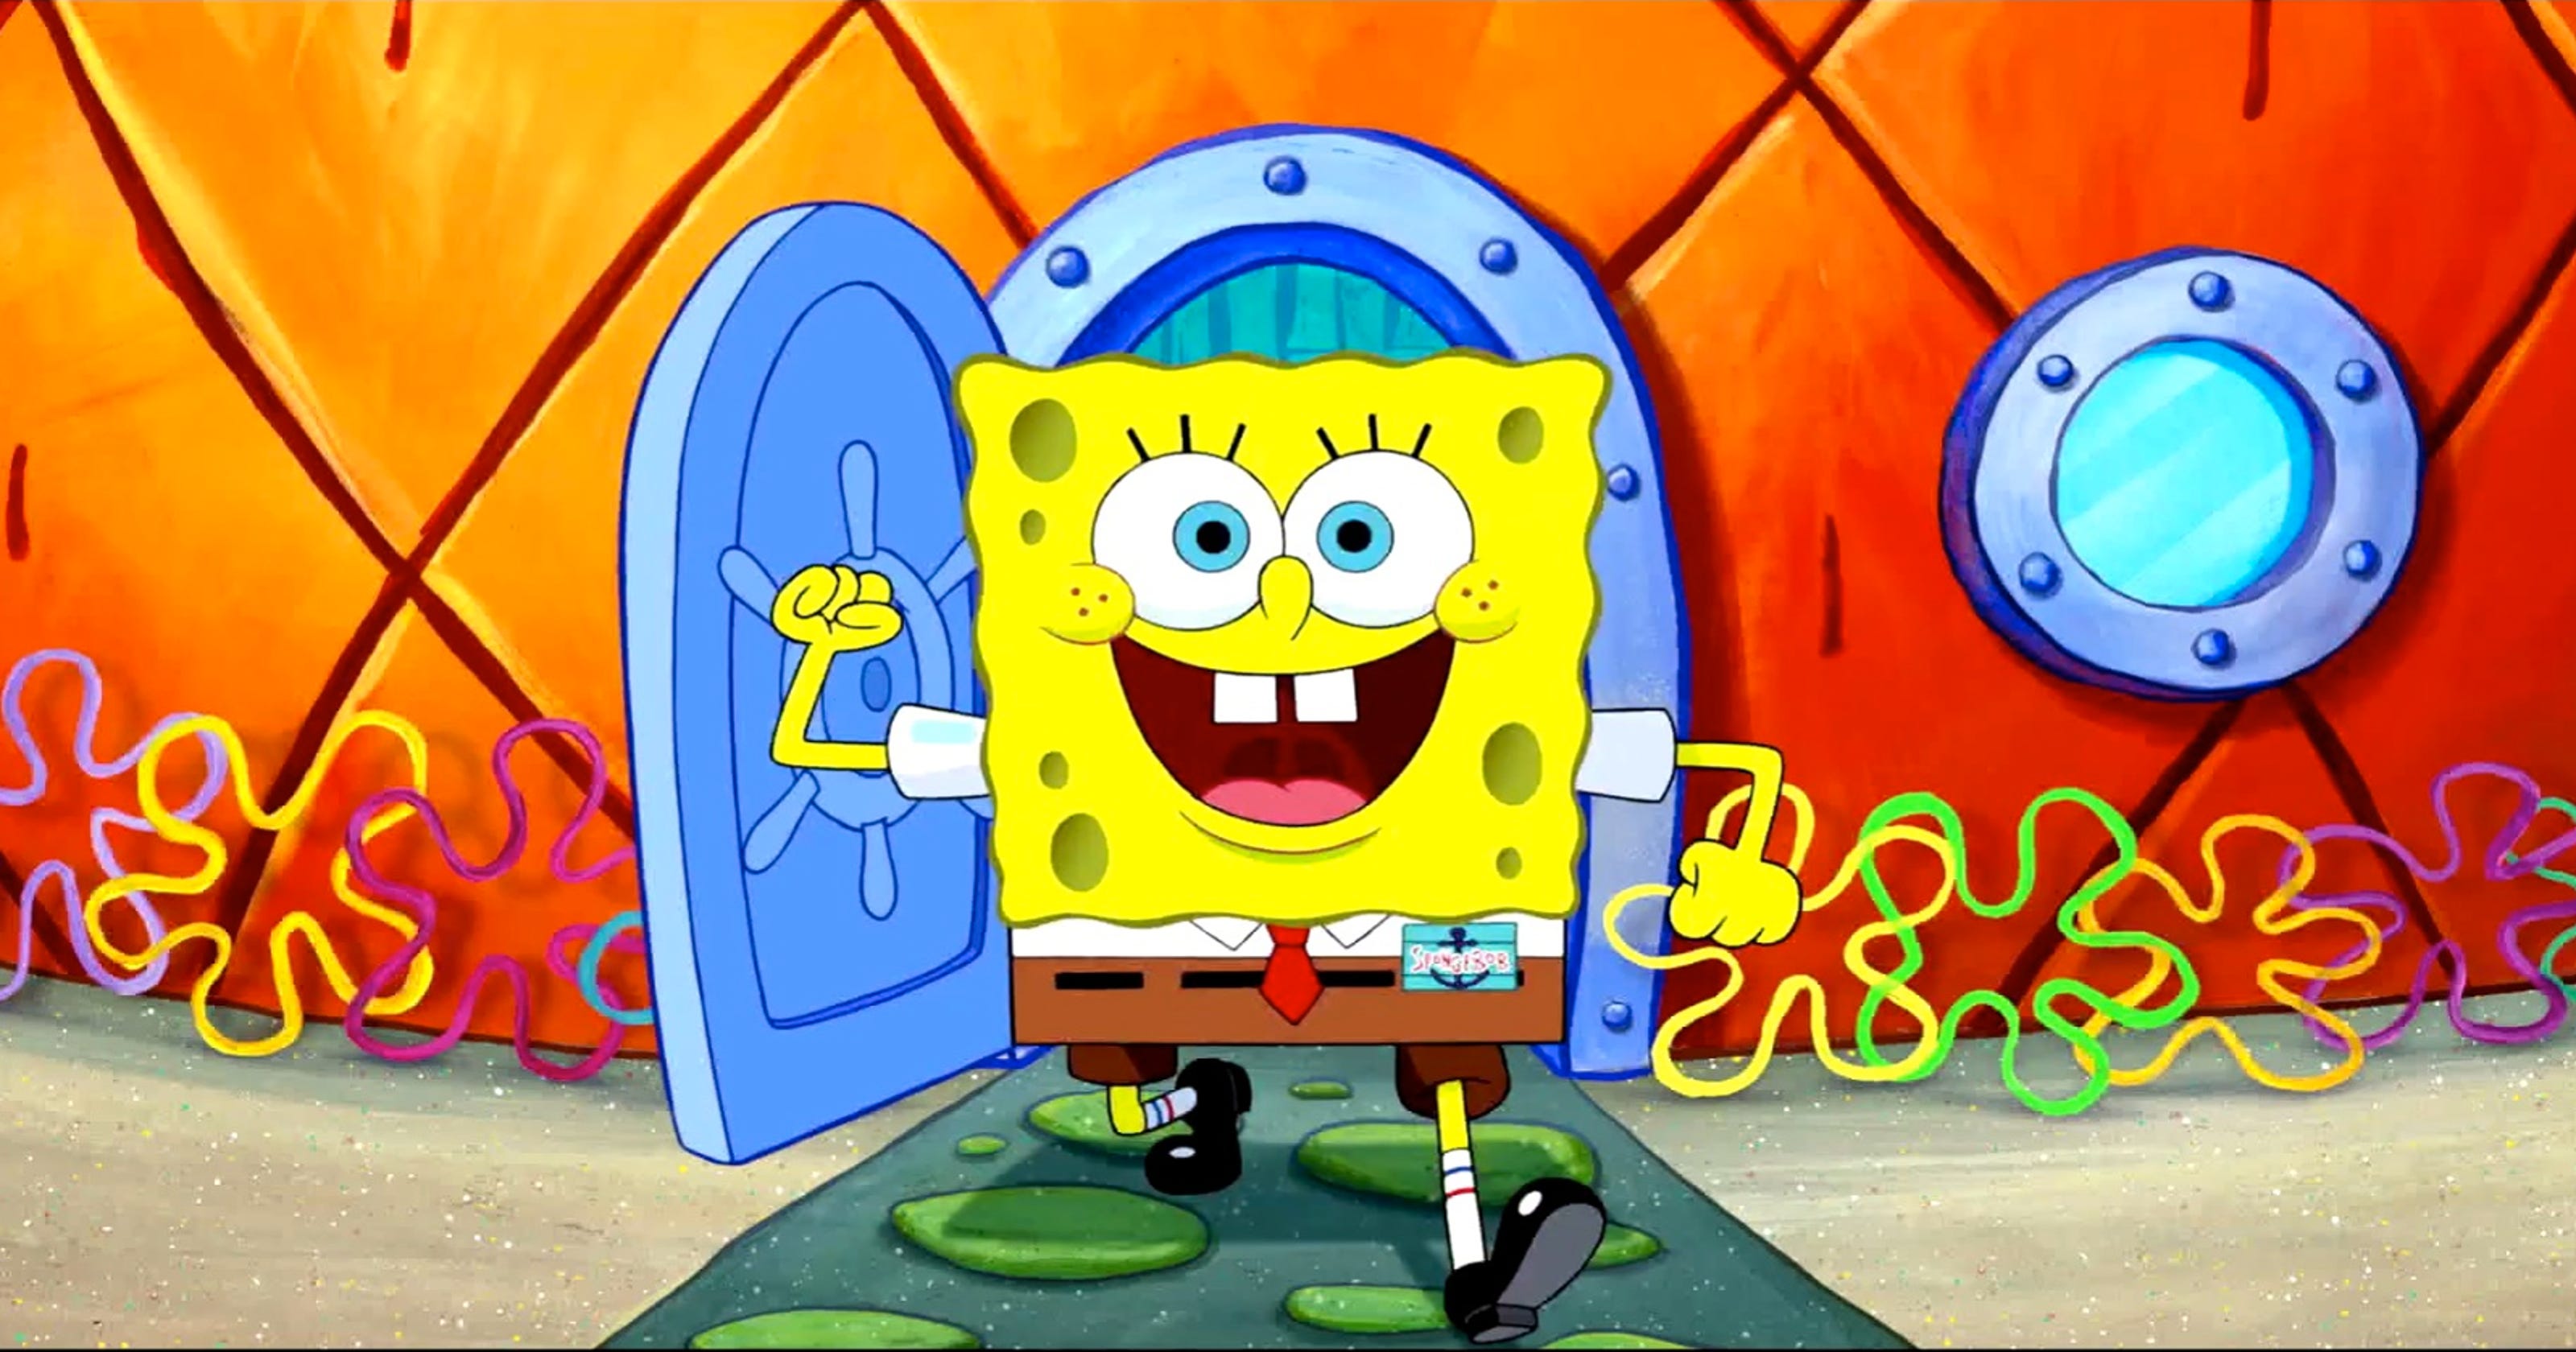 Spongebob Squarepants Not Ending In March Despite Viral Twitter Image